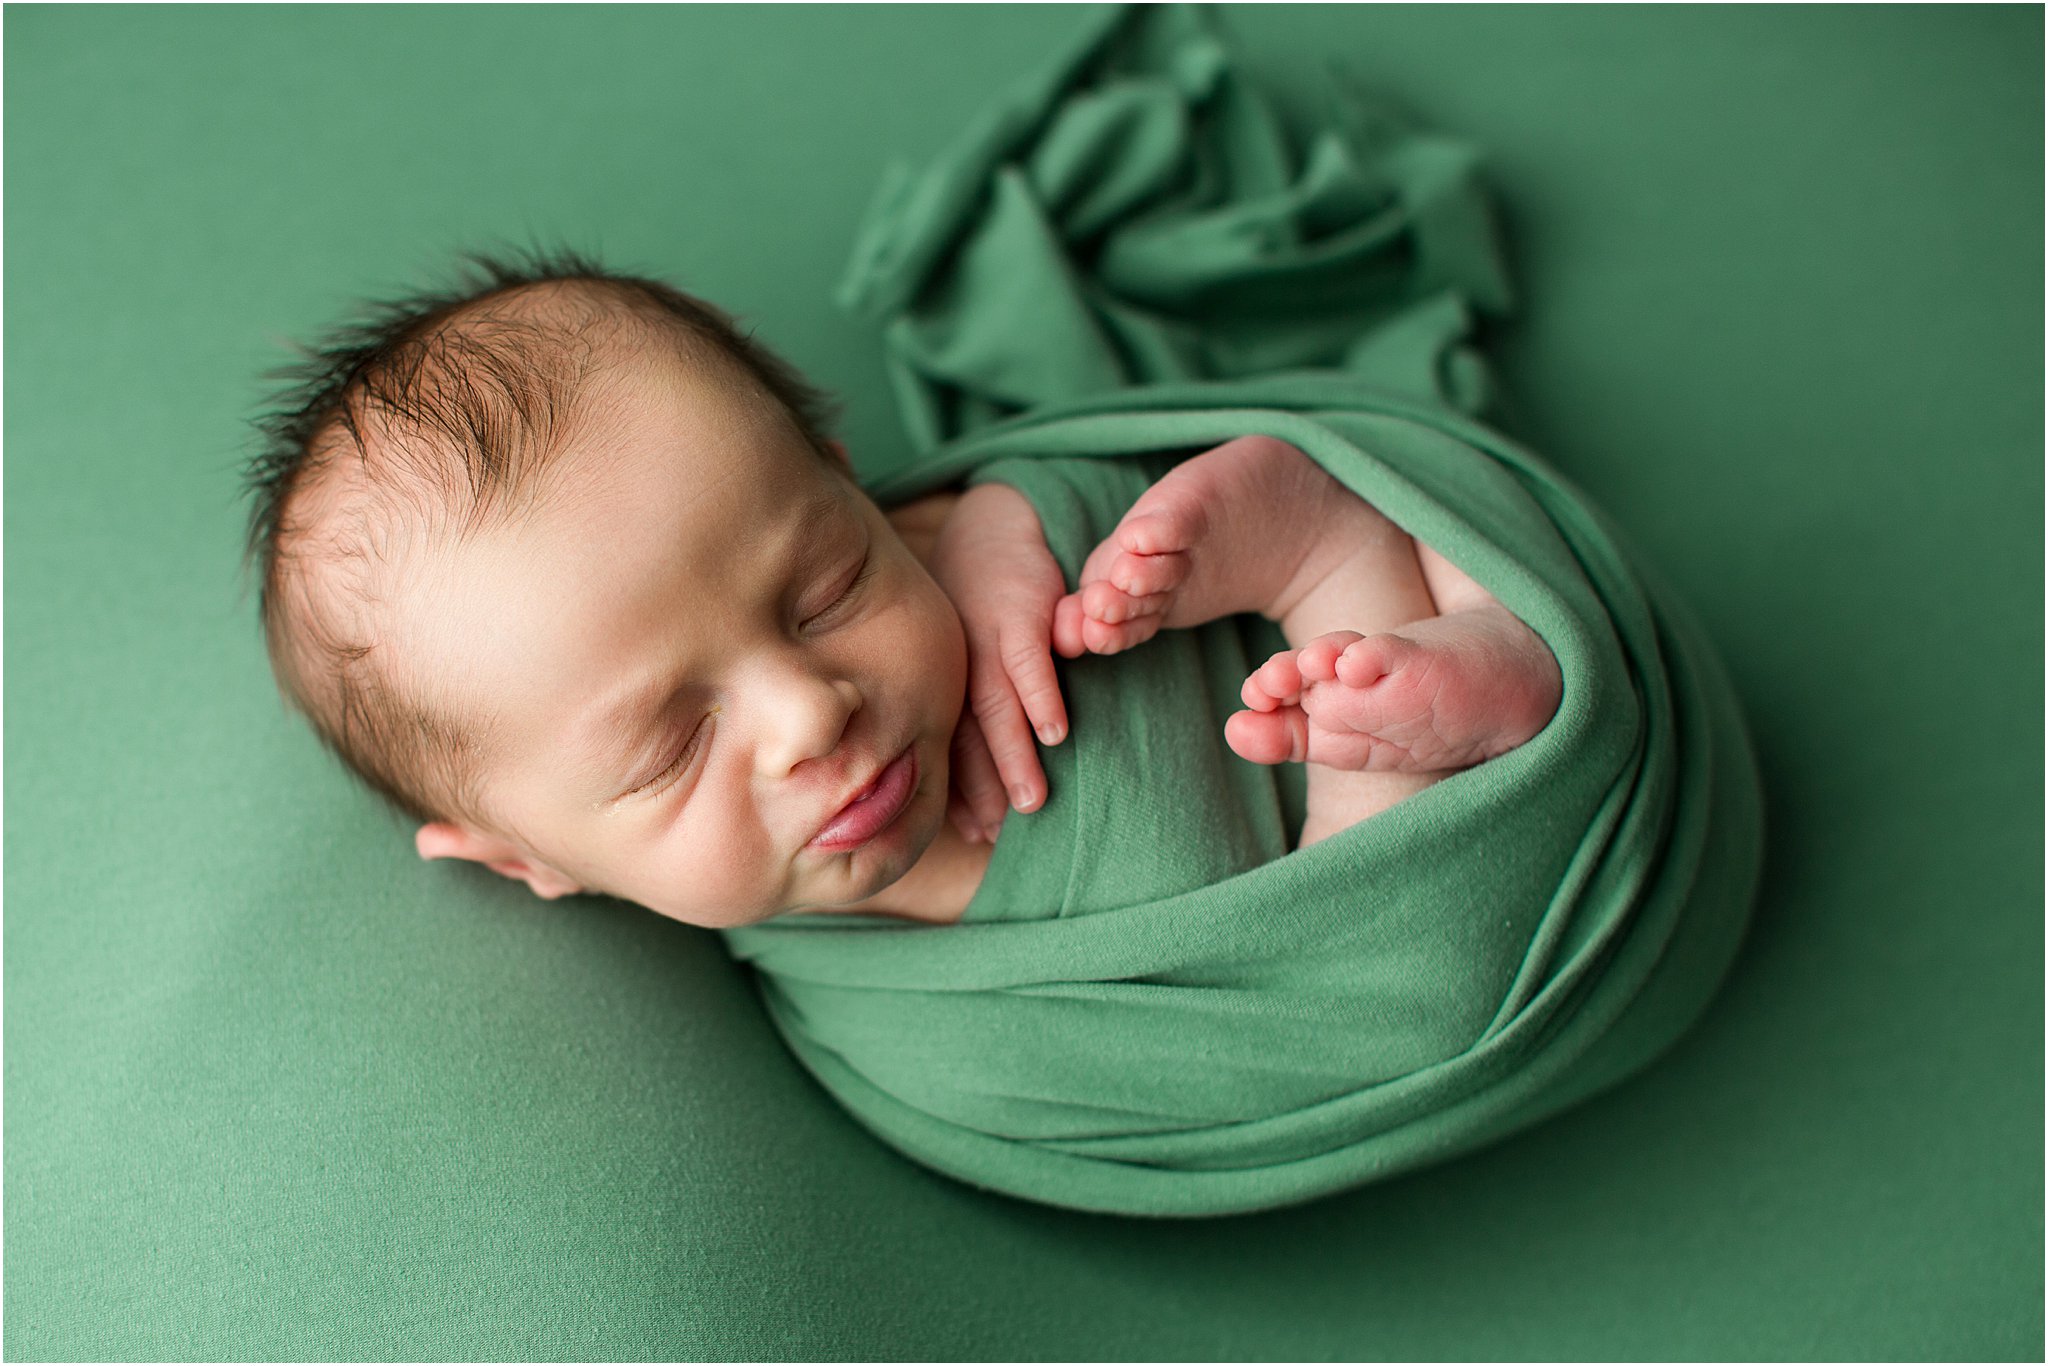 newborn boy pouty lip wrapped on green fabric